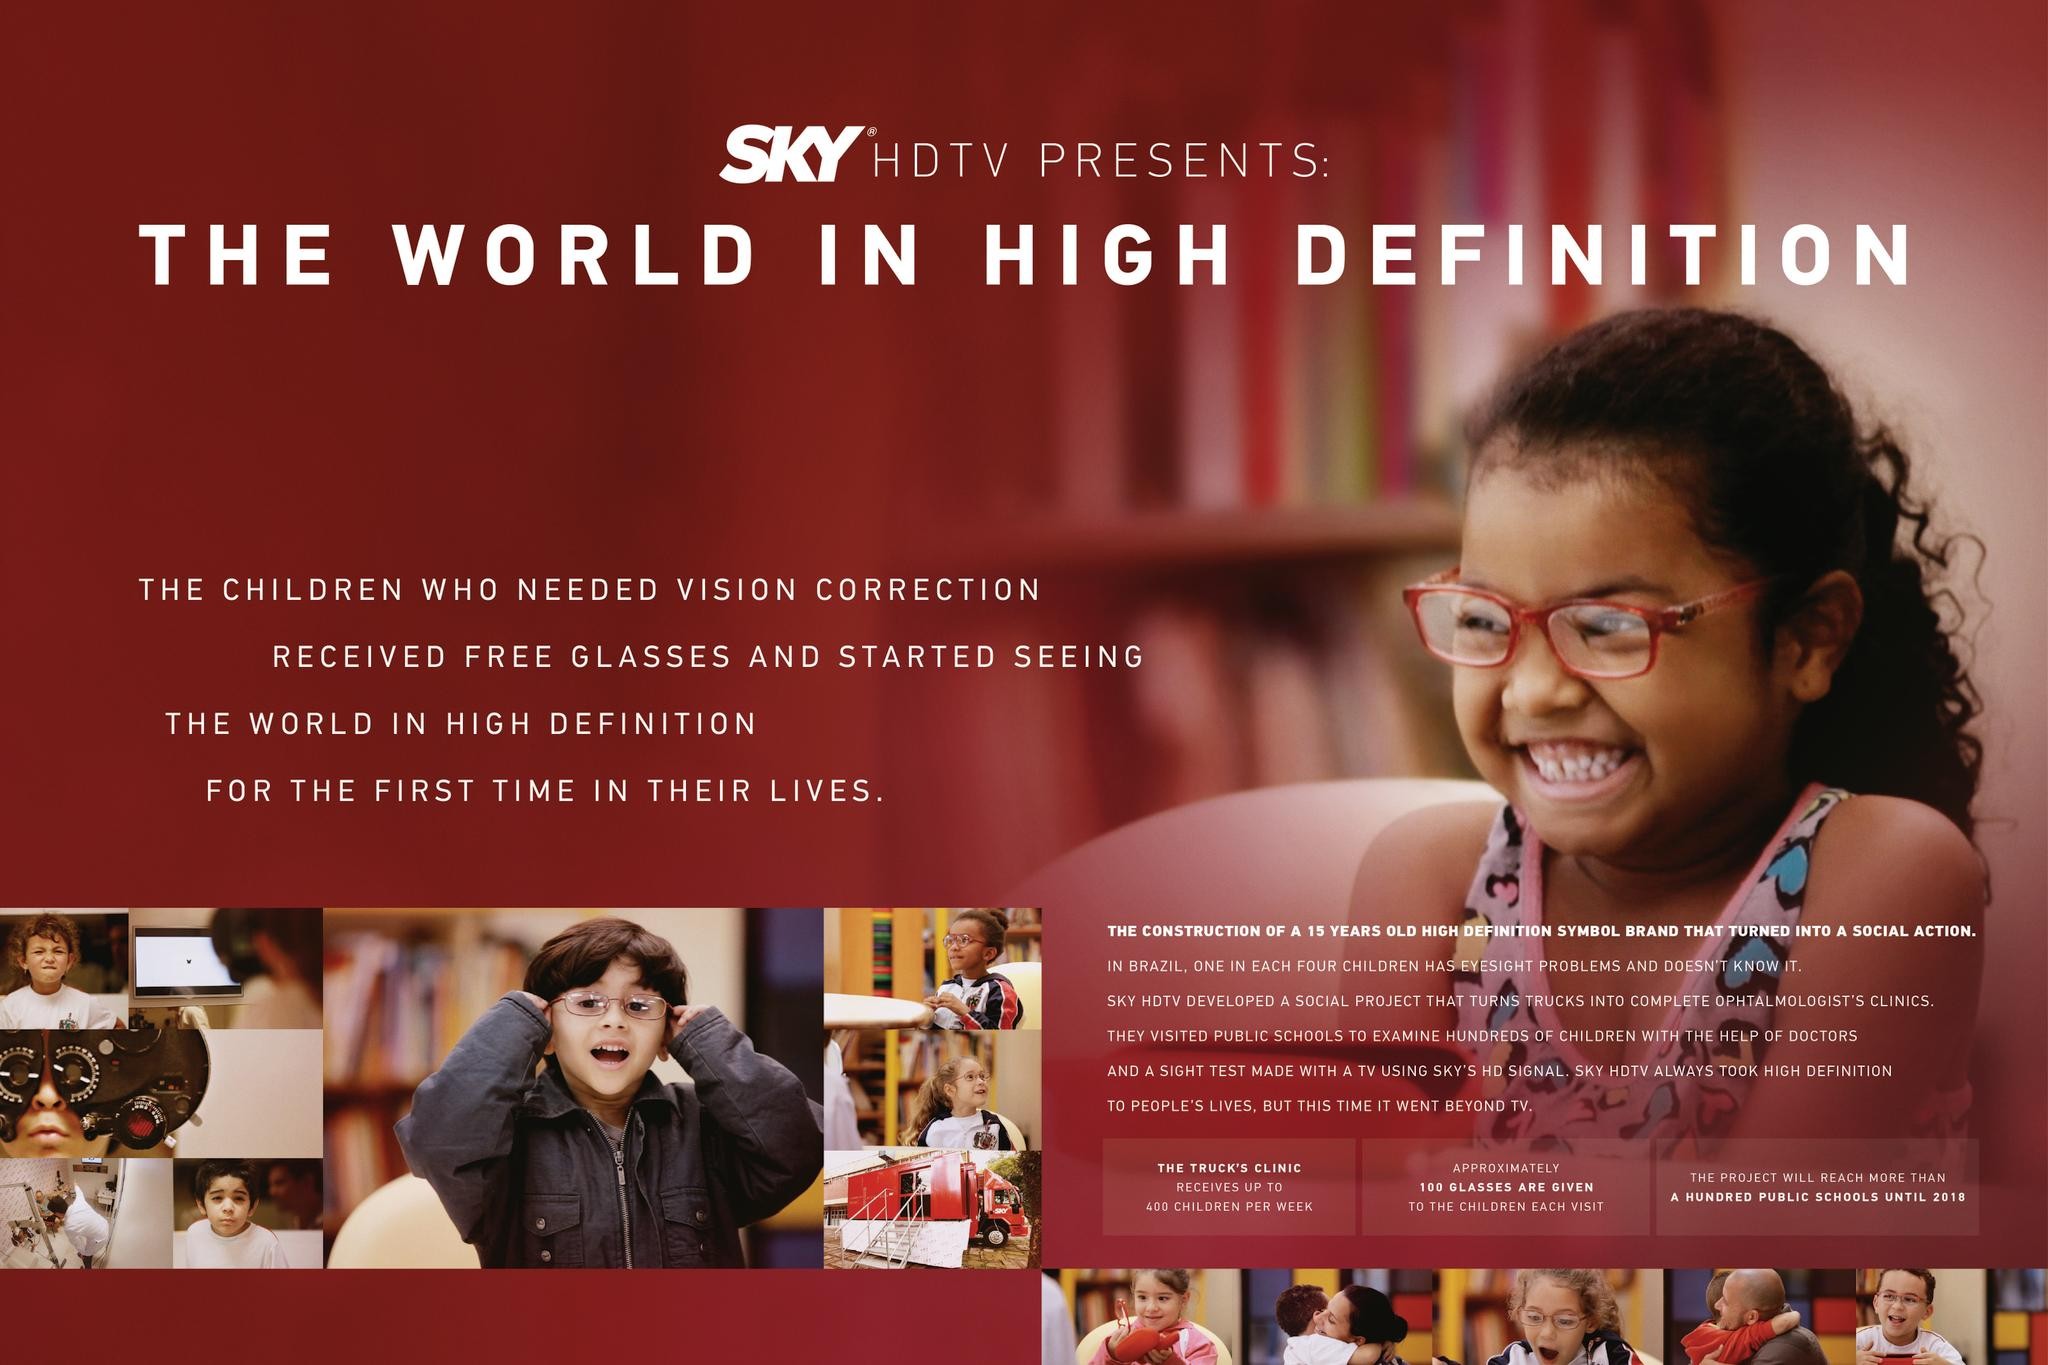 SKY HDTV - THE WORLD IN HIGH DEFINITIOIN